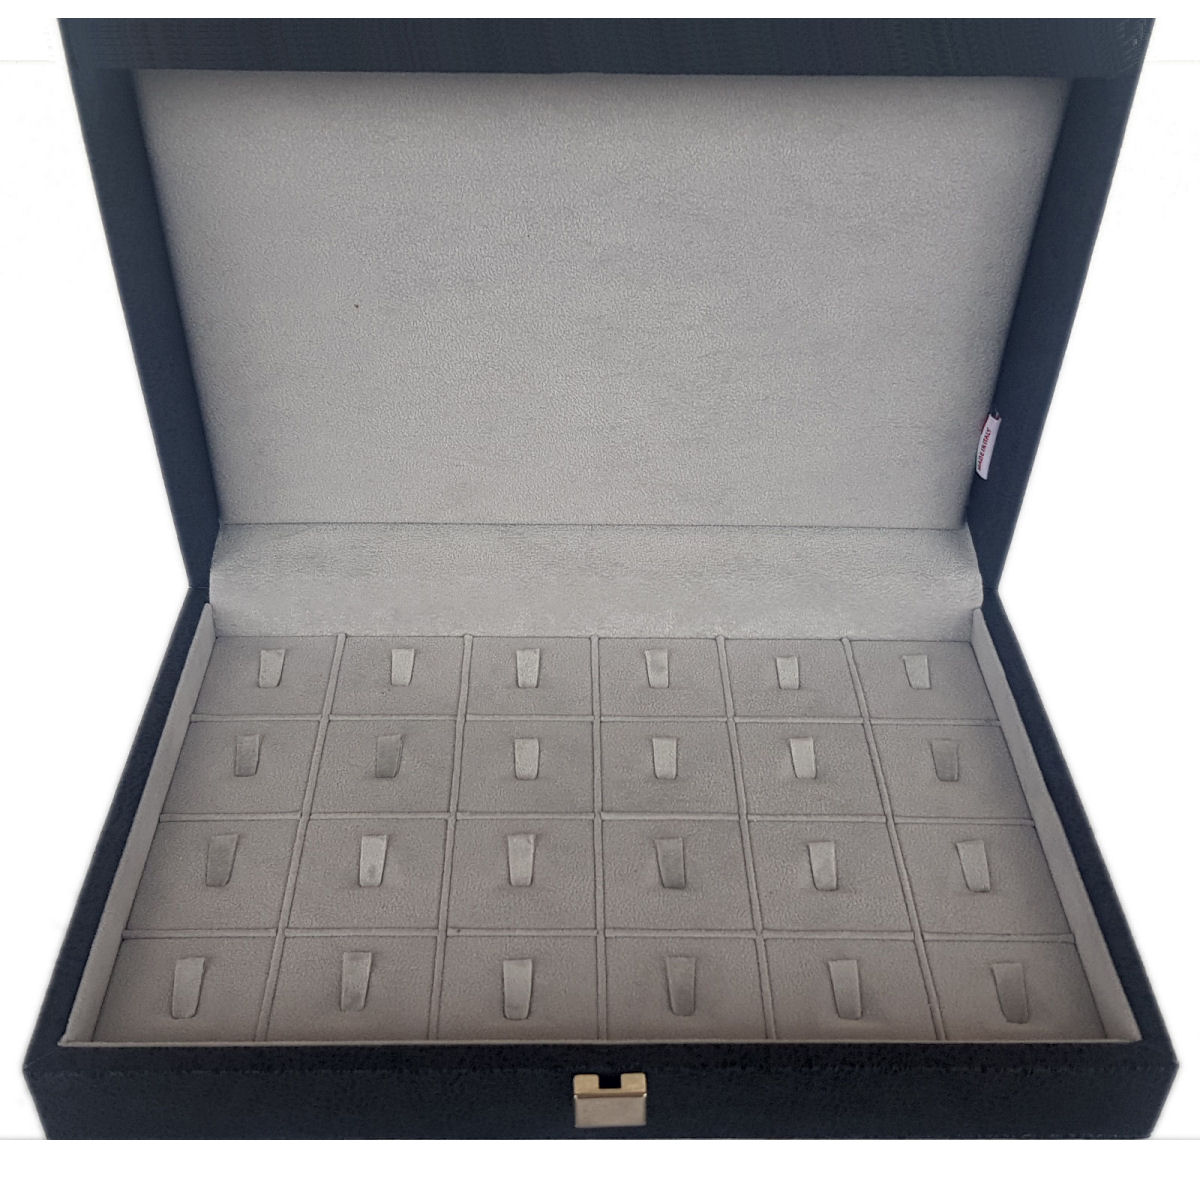 Igrometro analogico per scatole porta sigari 37mm